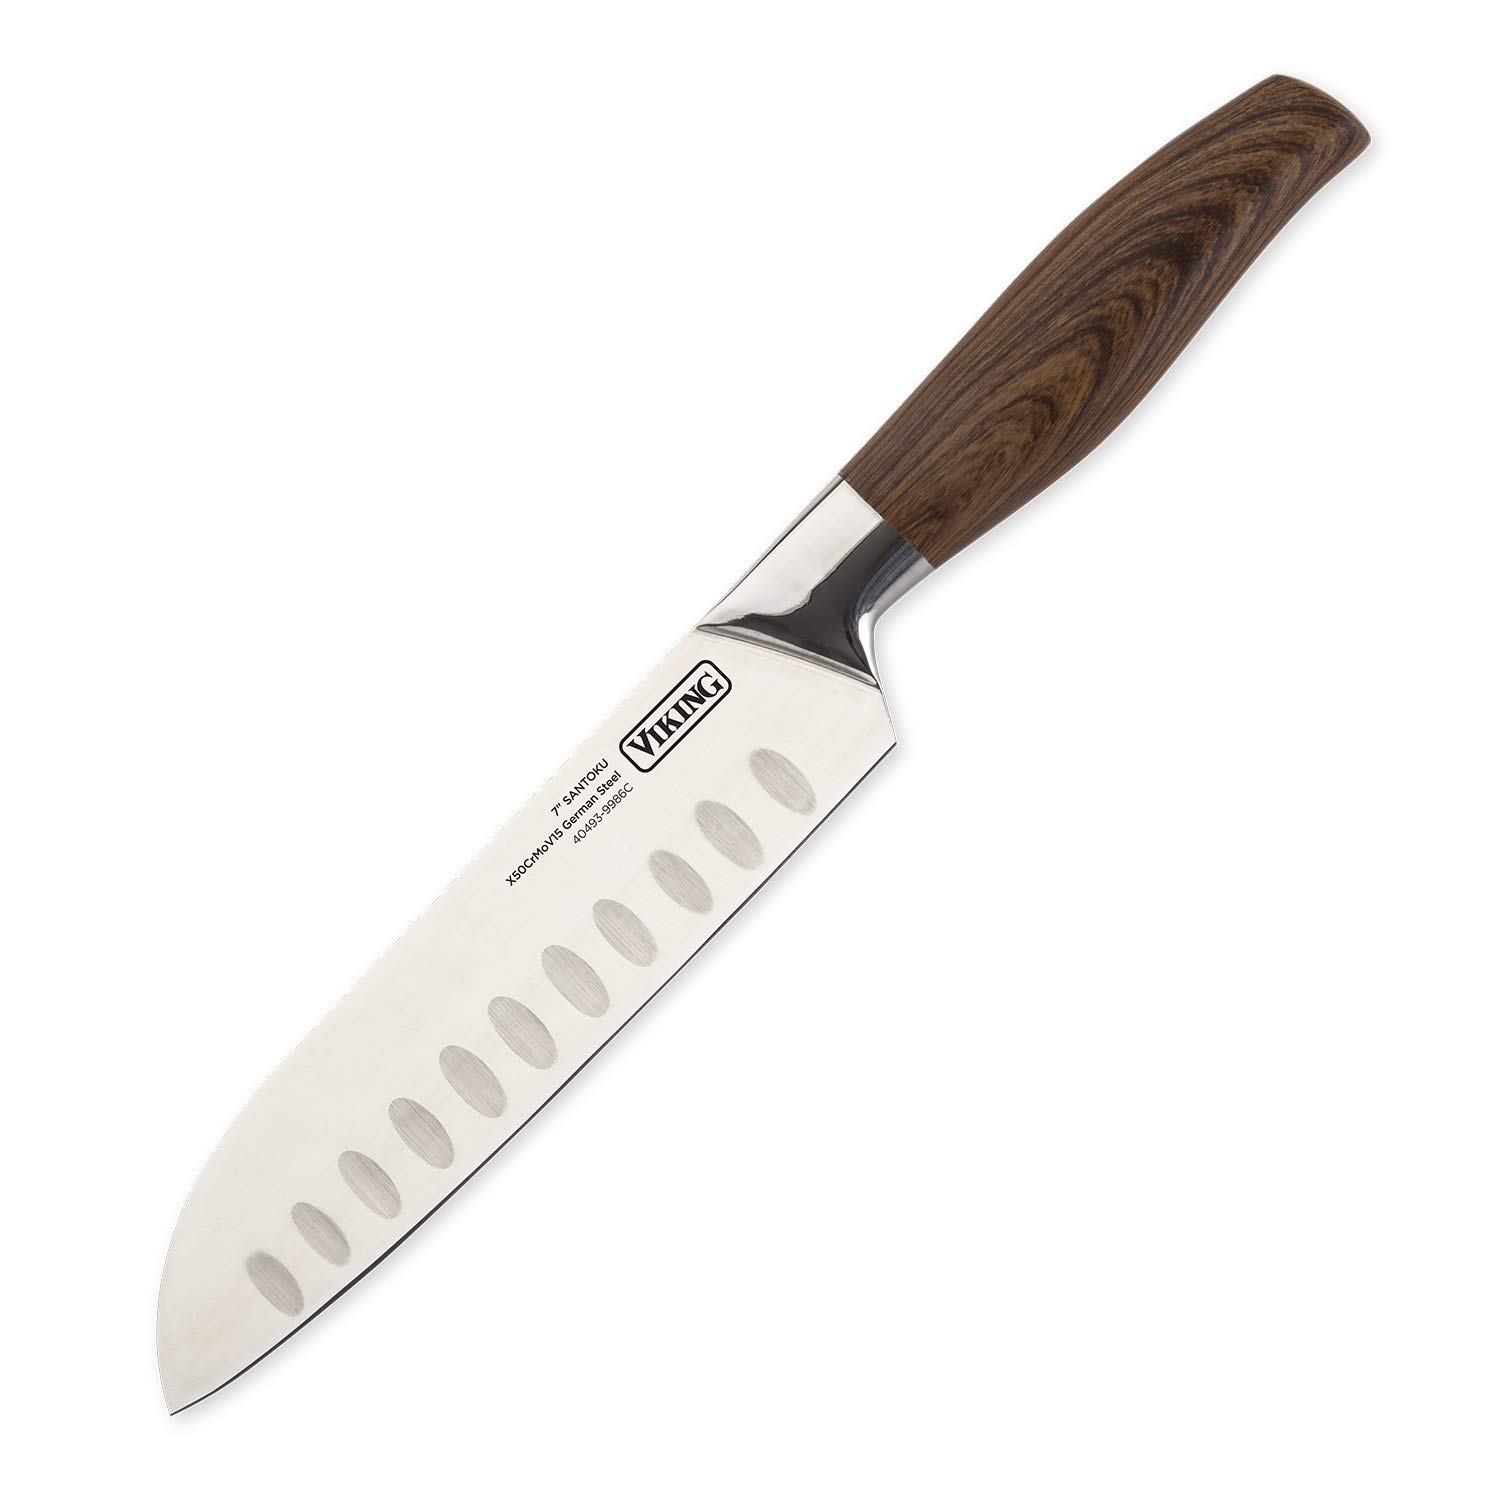 VIKING Culinary German Steel Hollow Handle Knife Set, 6 Piece